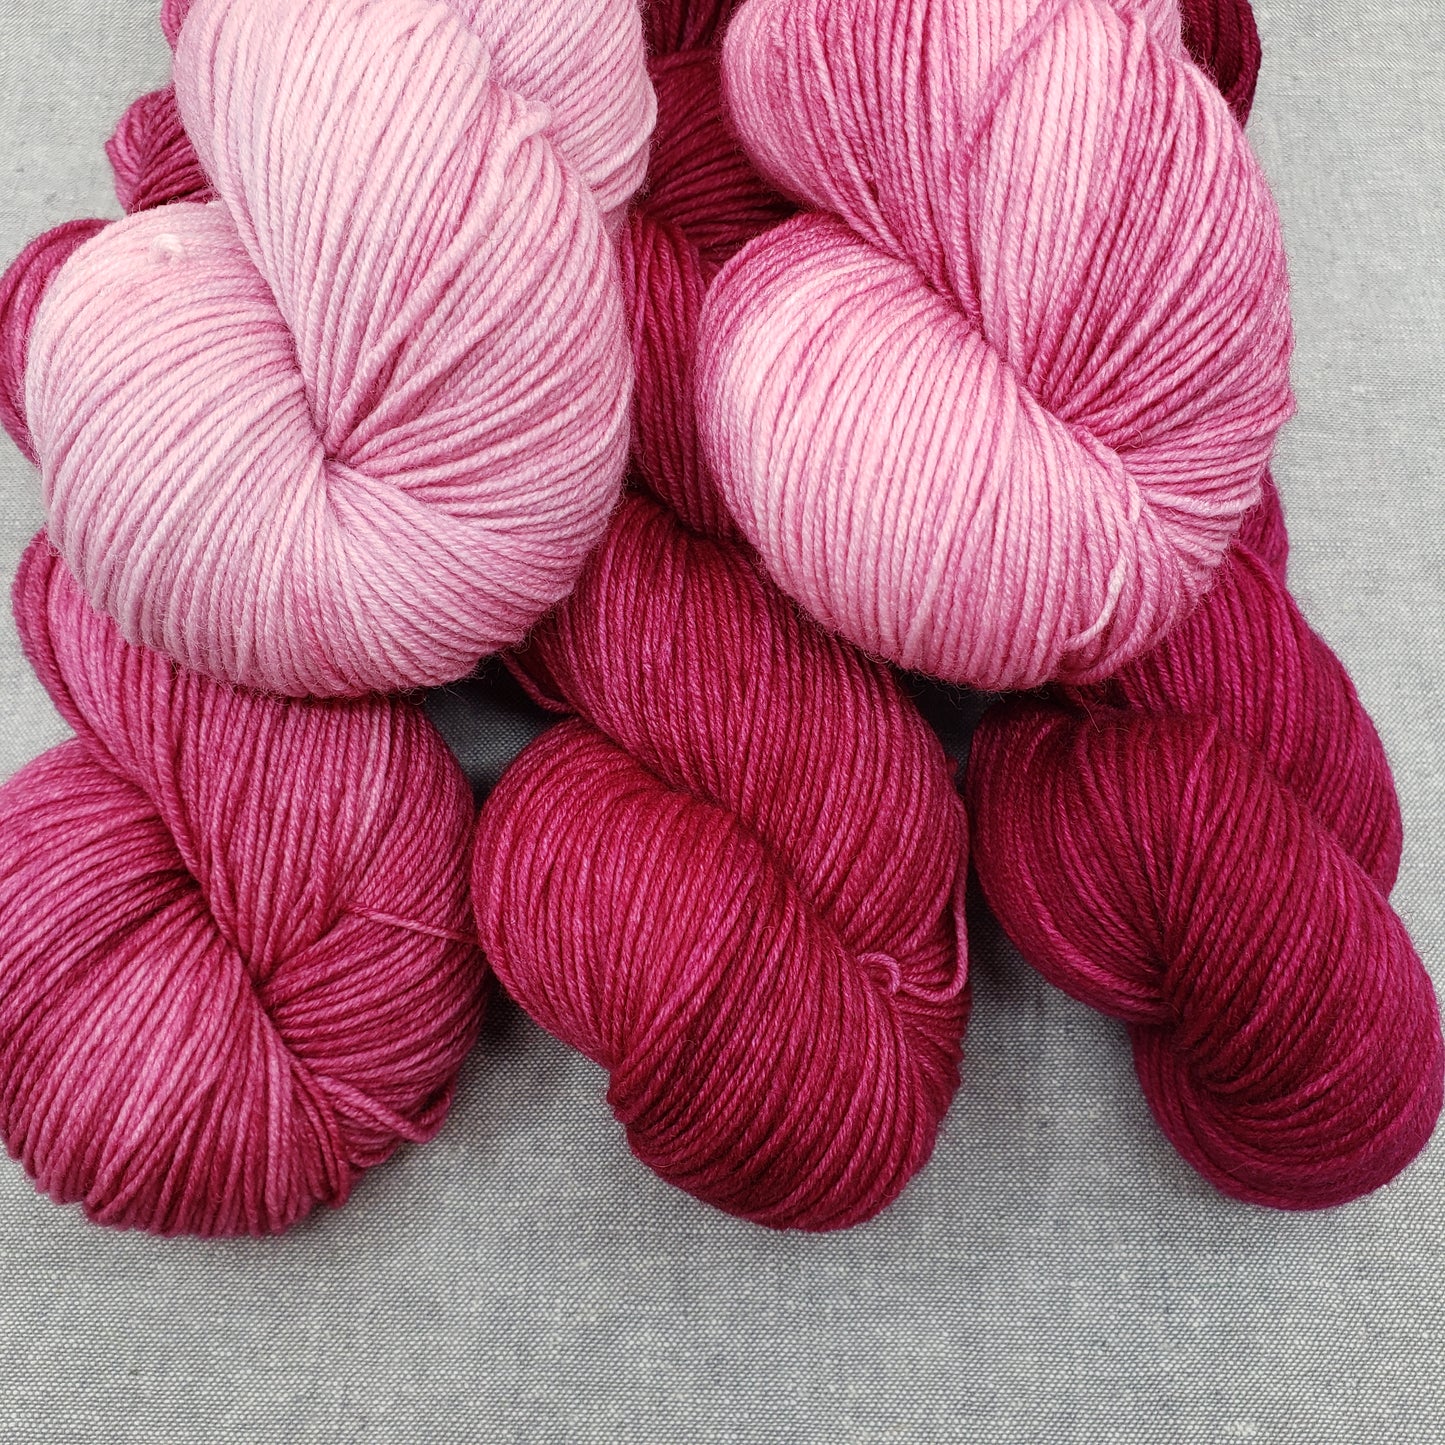 Raspberry Yarn Set